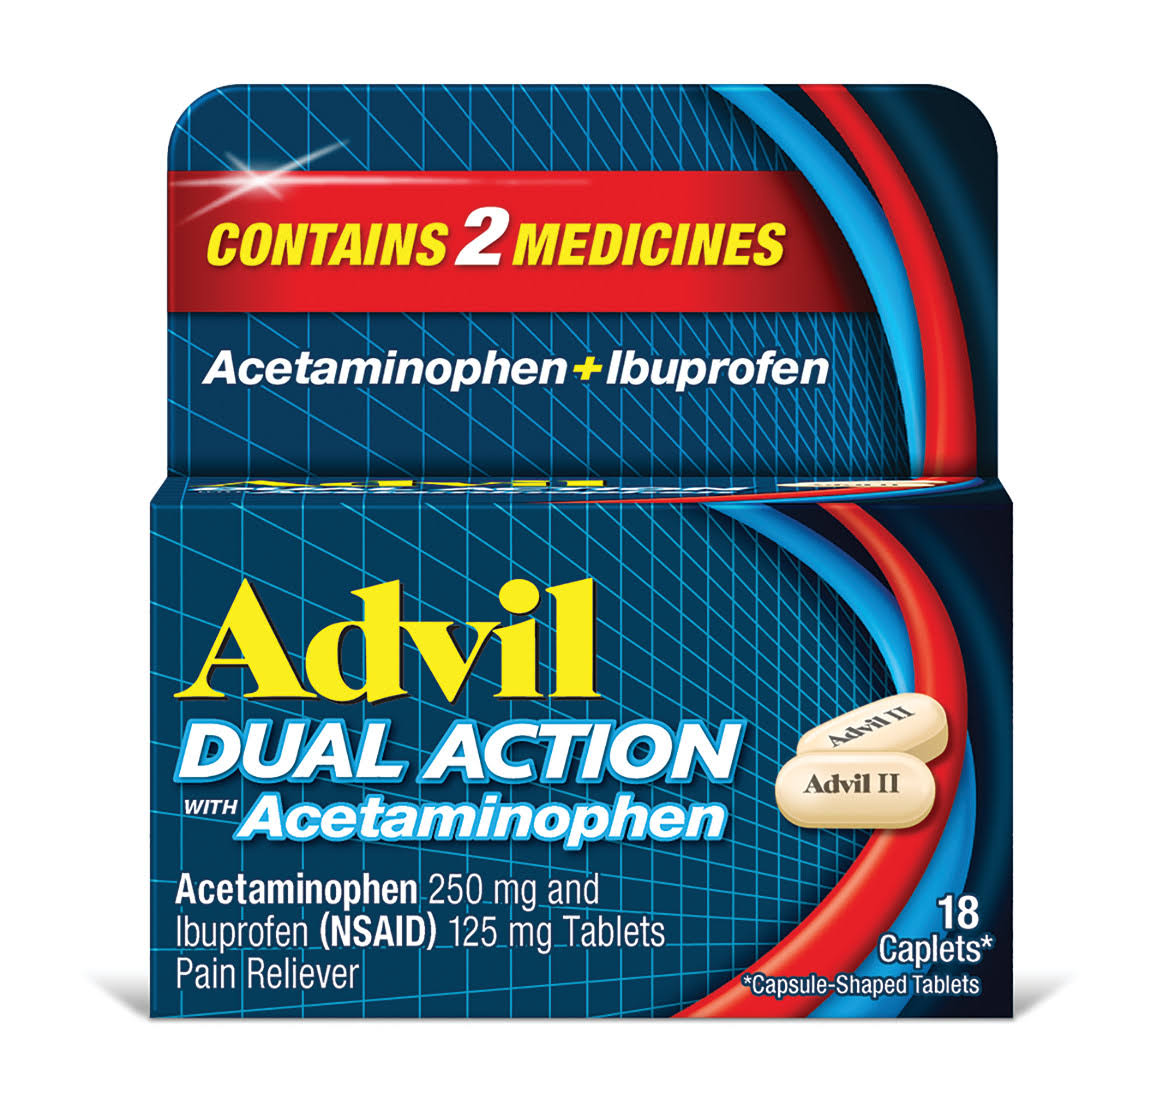 Advil Pain Reliever, Dual Action with Acetaminophen, Caplets - 18 caplets